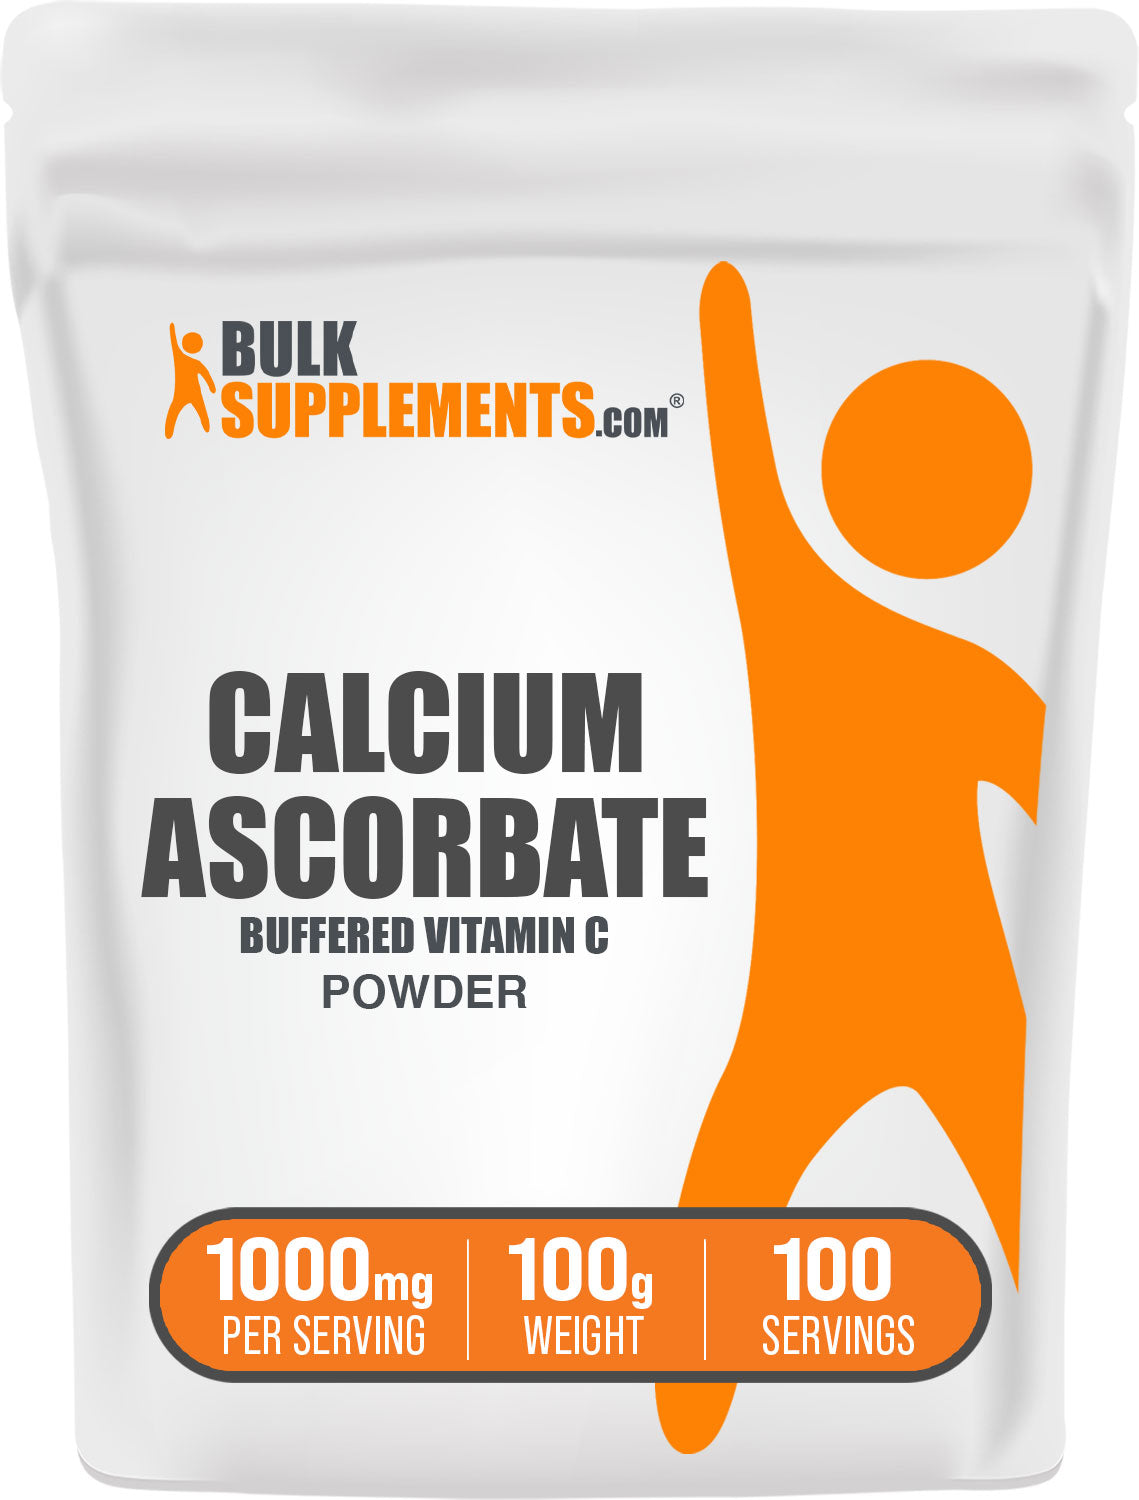 BulkSupplements.com Calcium Ascorbate 100g bag